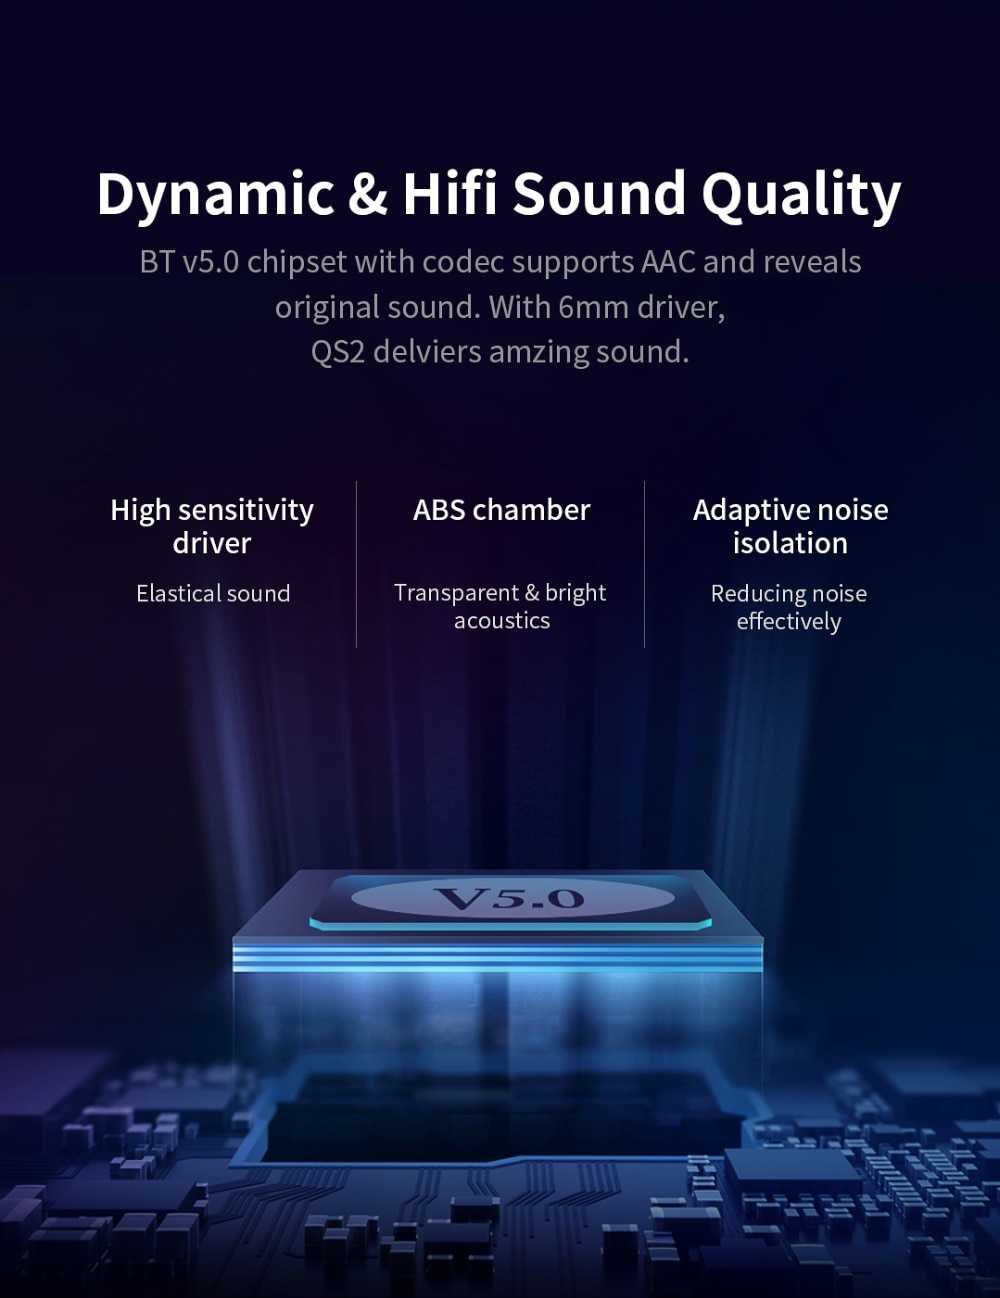 QCY T1 New TWS Bluetooth v5.0 Earphones Wholesale